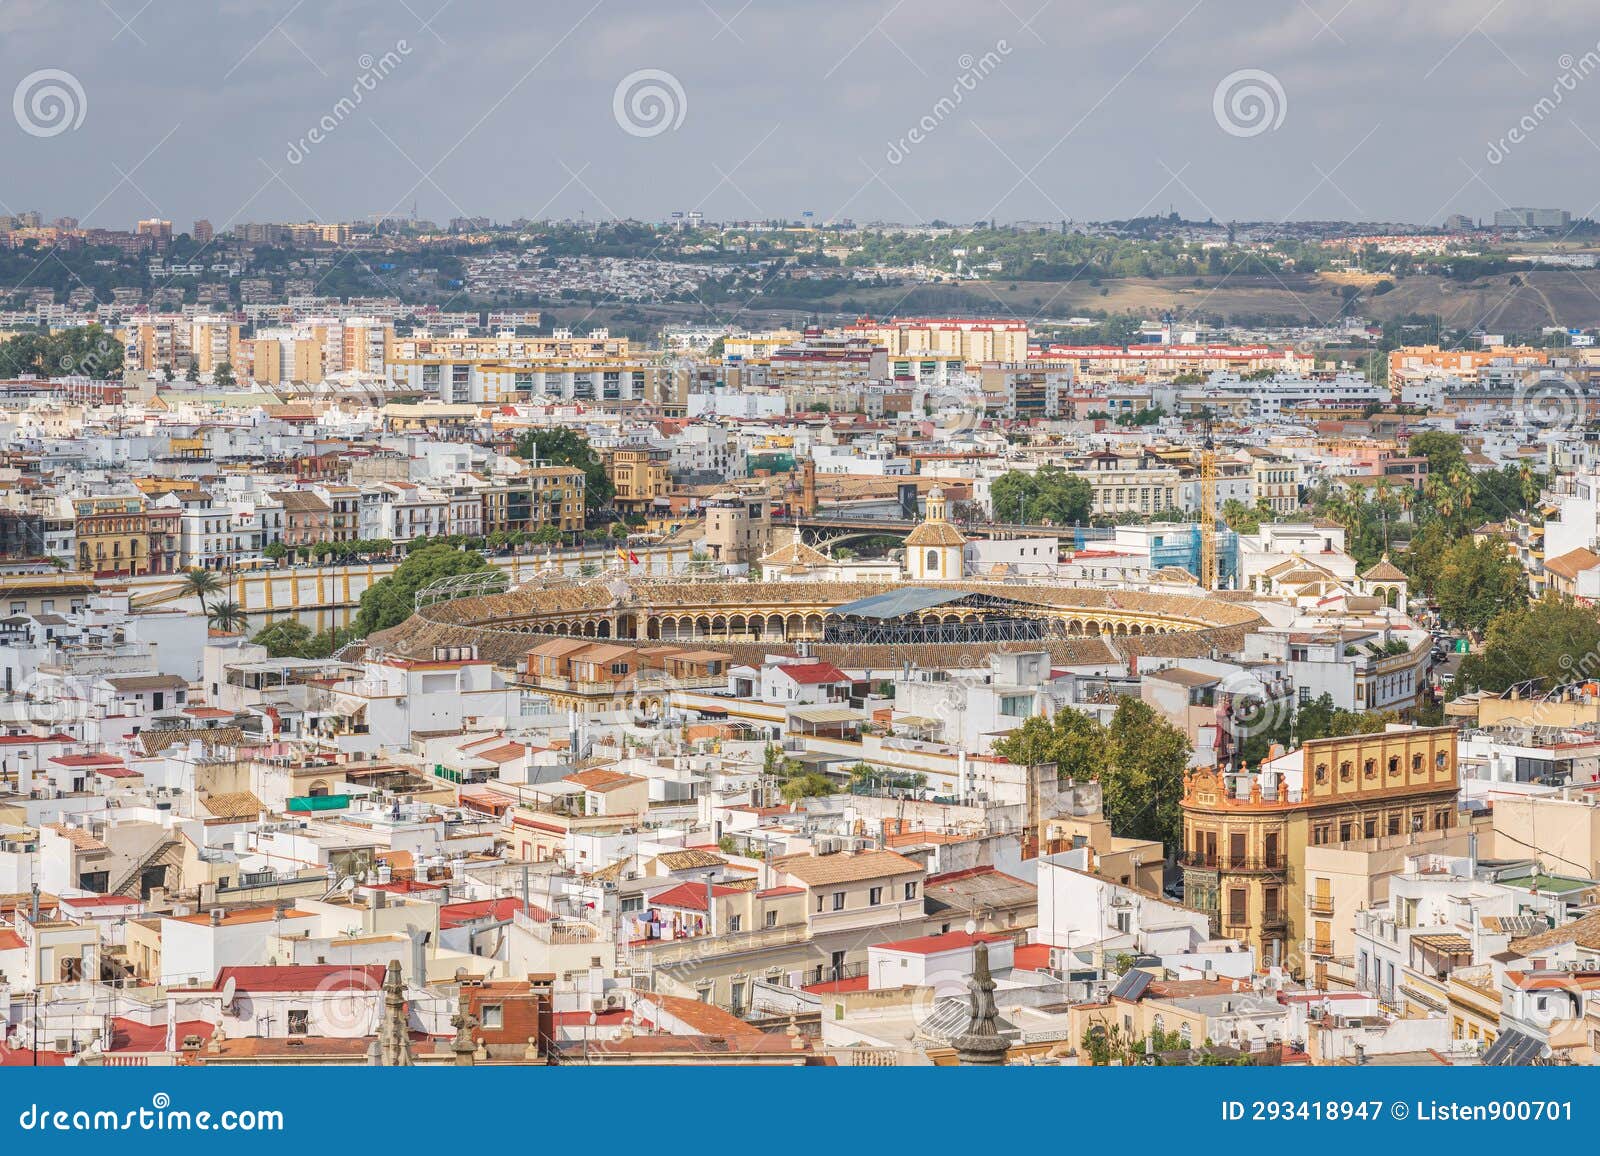 seville city skyline and the plaza de toros de la real maestranza de caballeria de sevilla